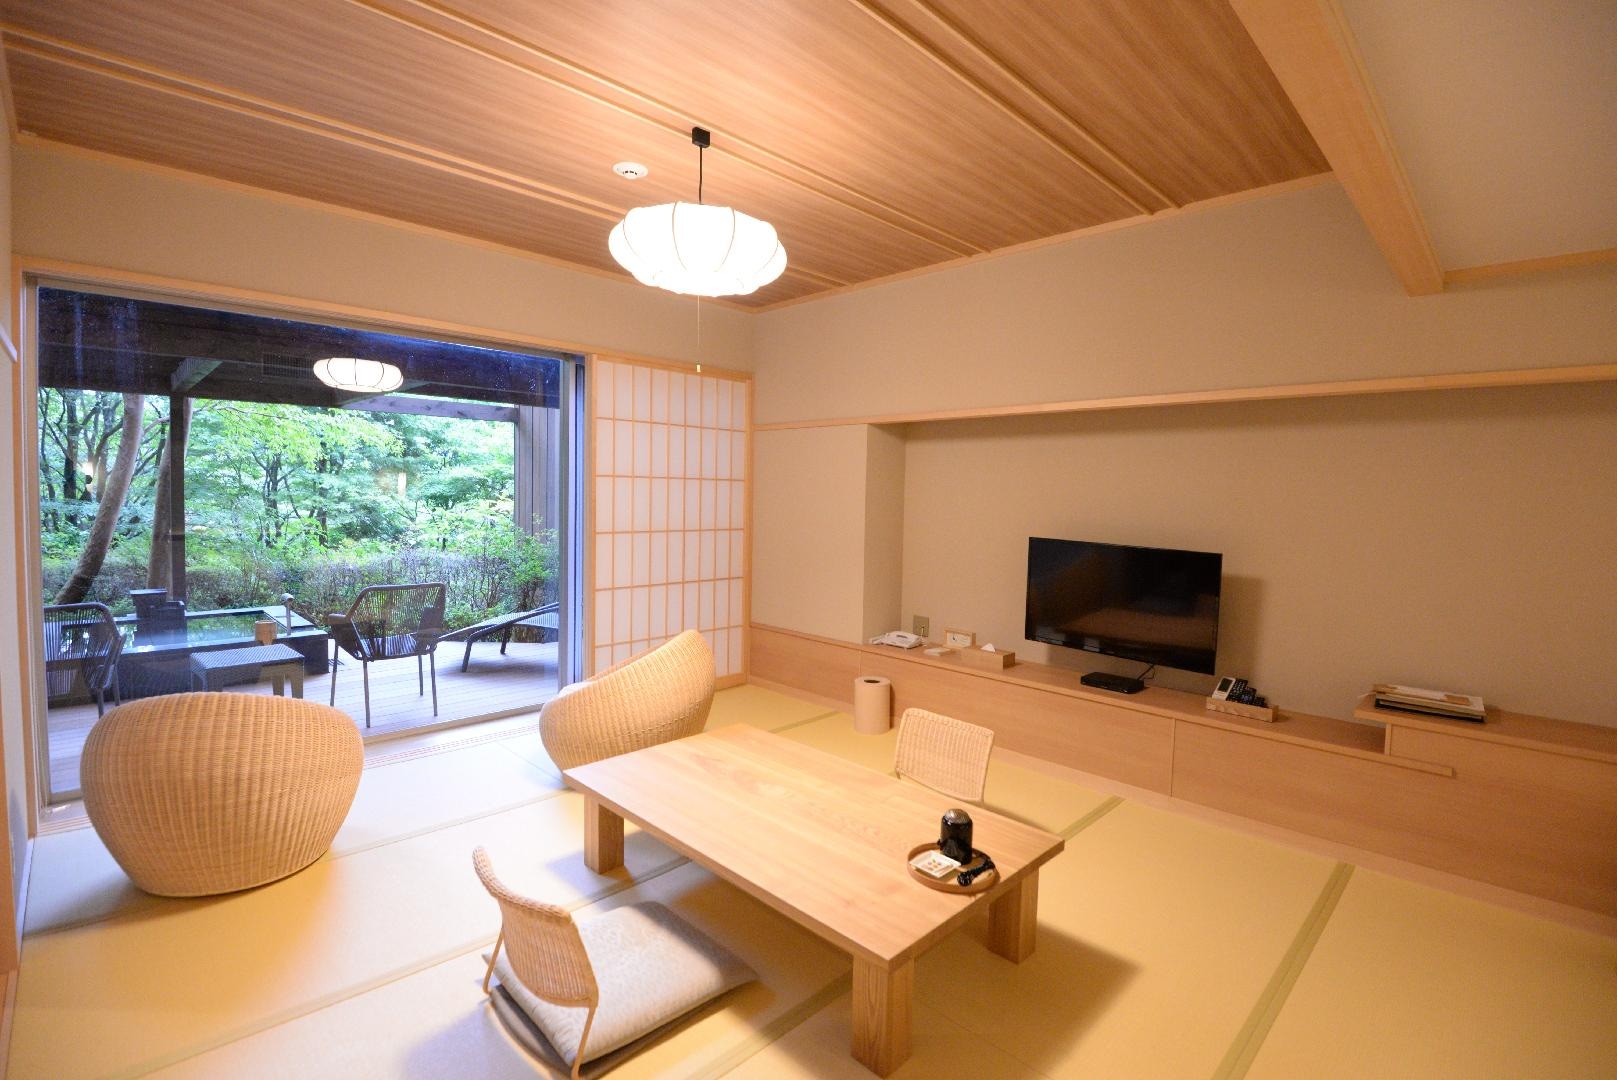 Japanese and Western room 14 tatami mats + garden deck "Michi" "Iwa"